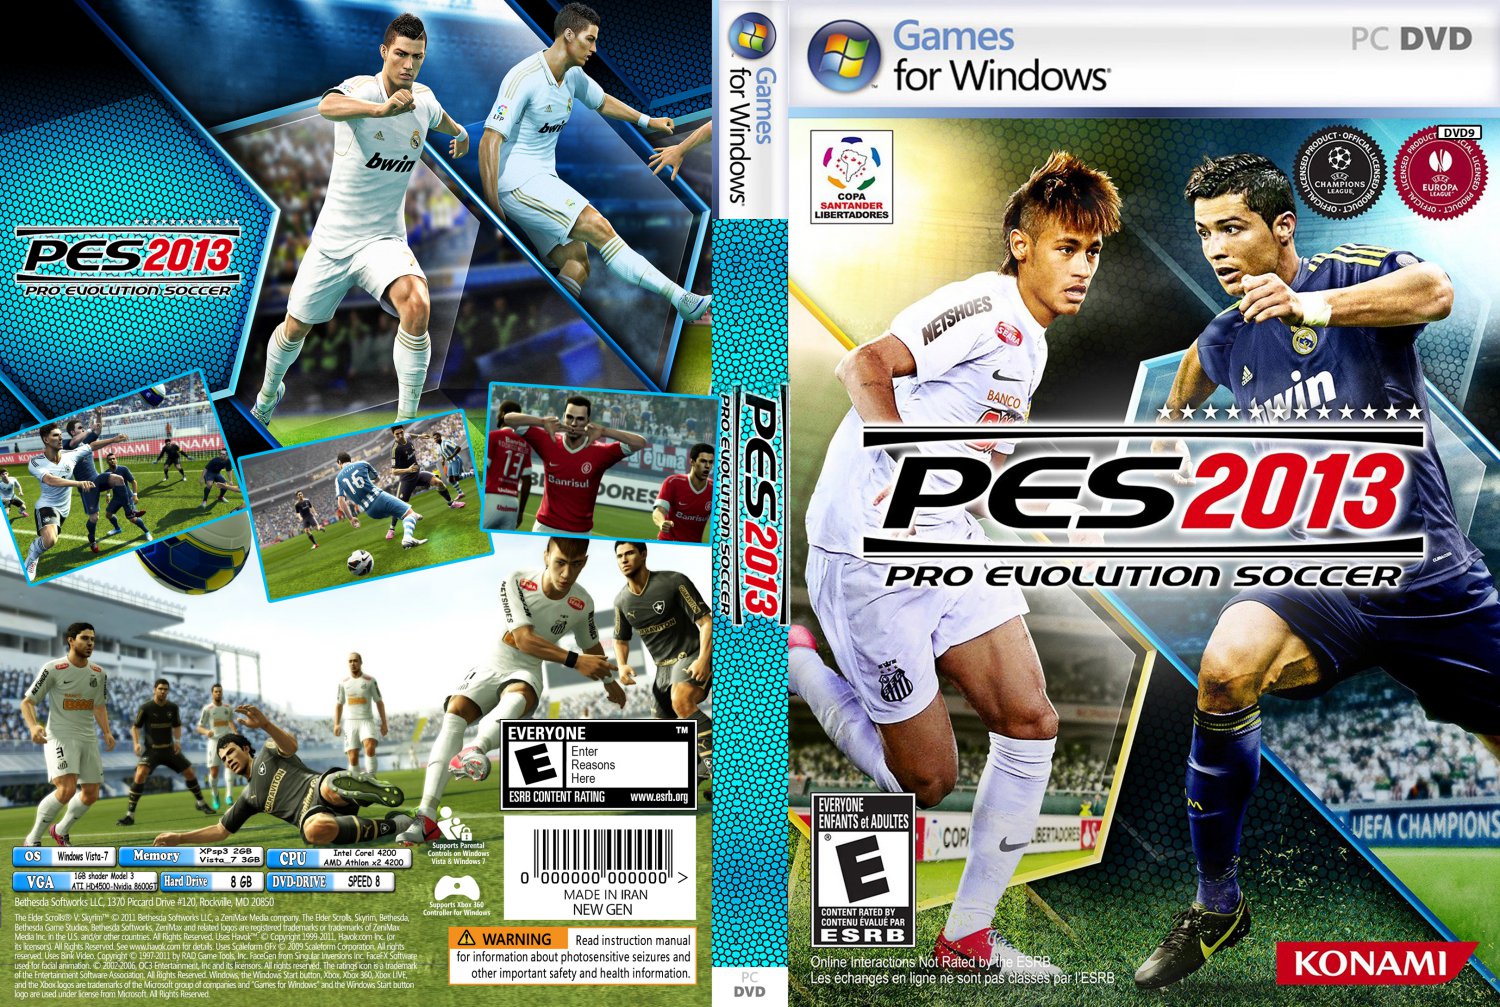 Игр футбол 2013. Pro Evolution Soccer 2013 ps3 обложка. PES 2013 ps3 Cover. Pro Evolution Soccer 2015 обложка. Pro Evolution Soccer DVD PC.